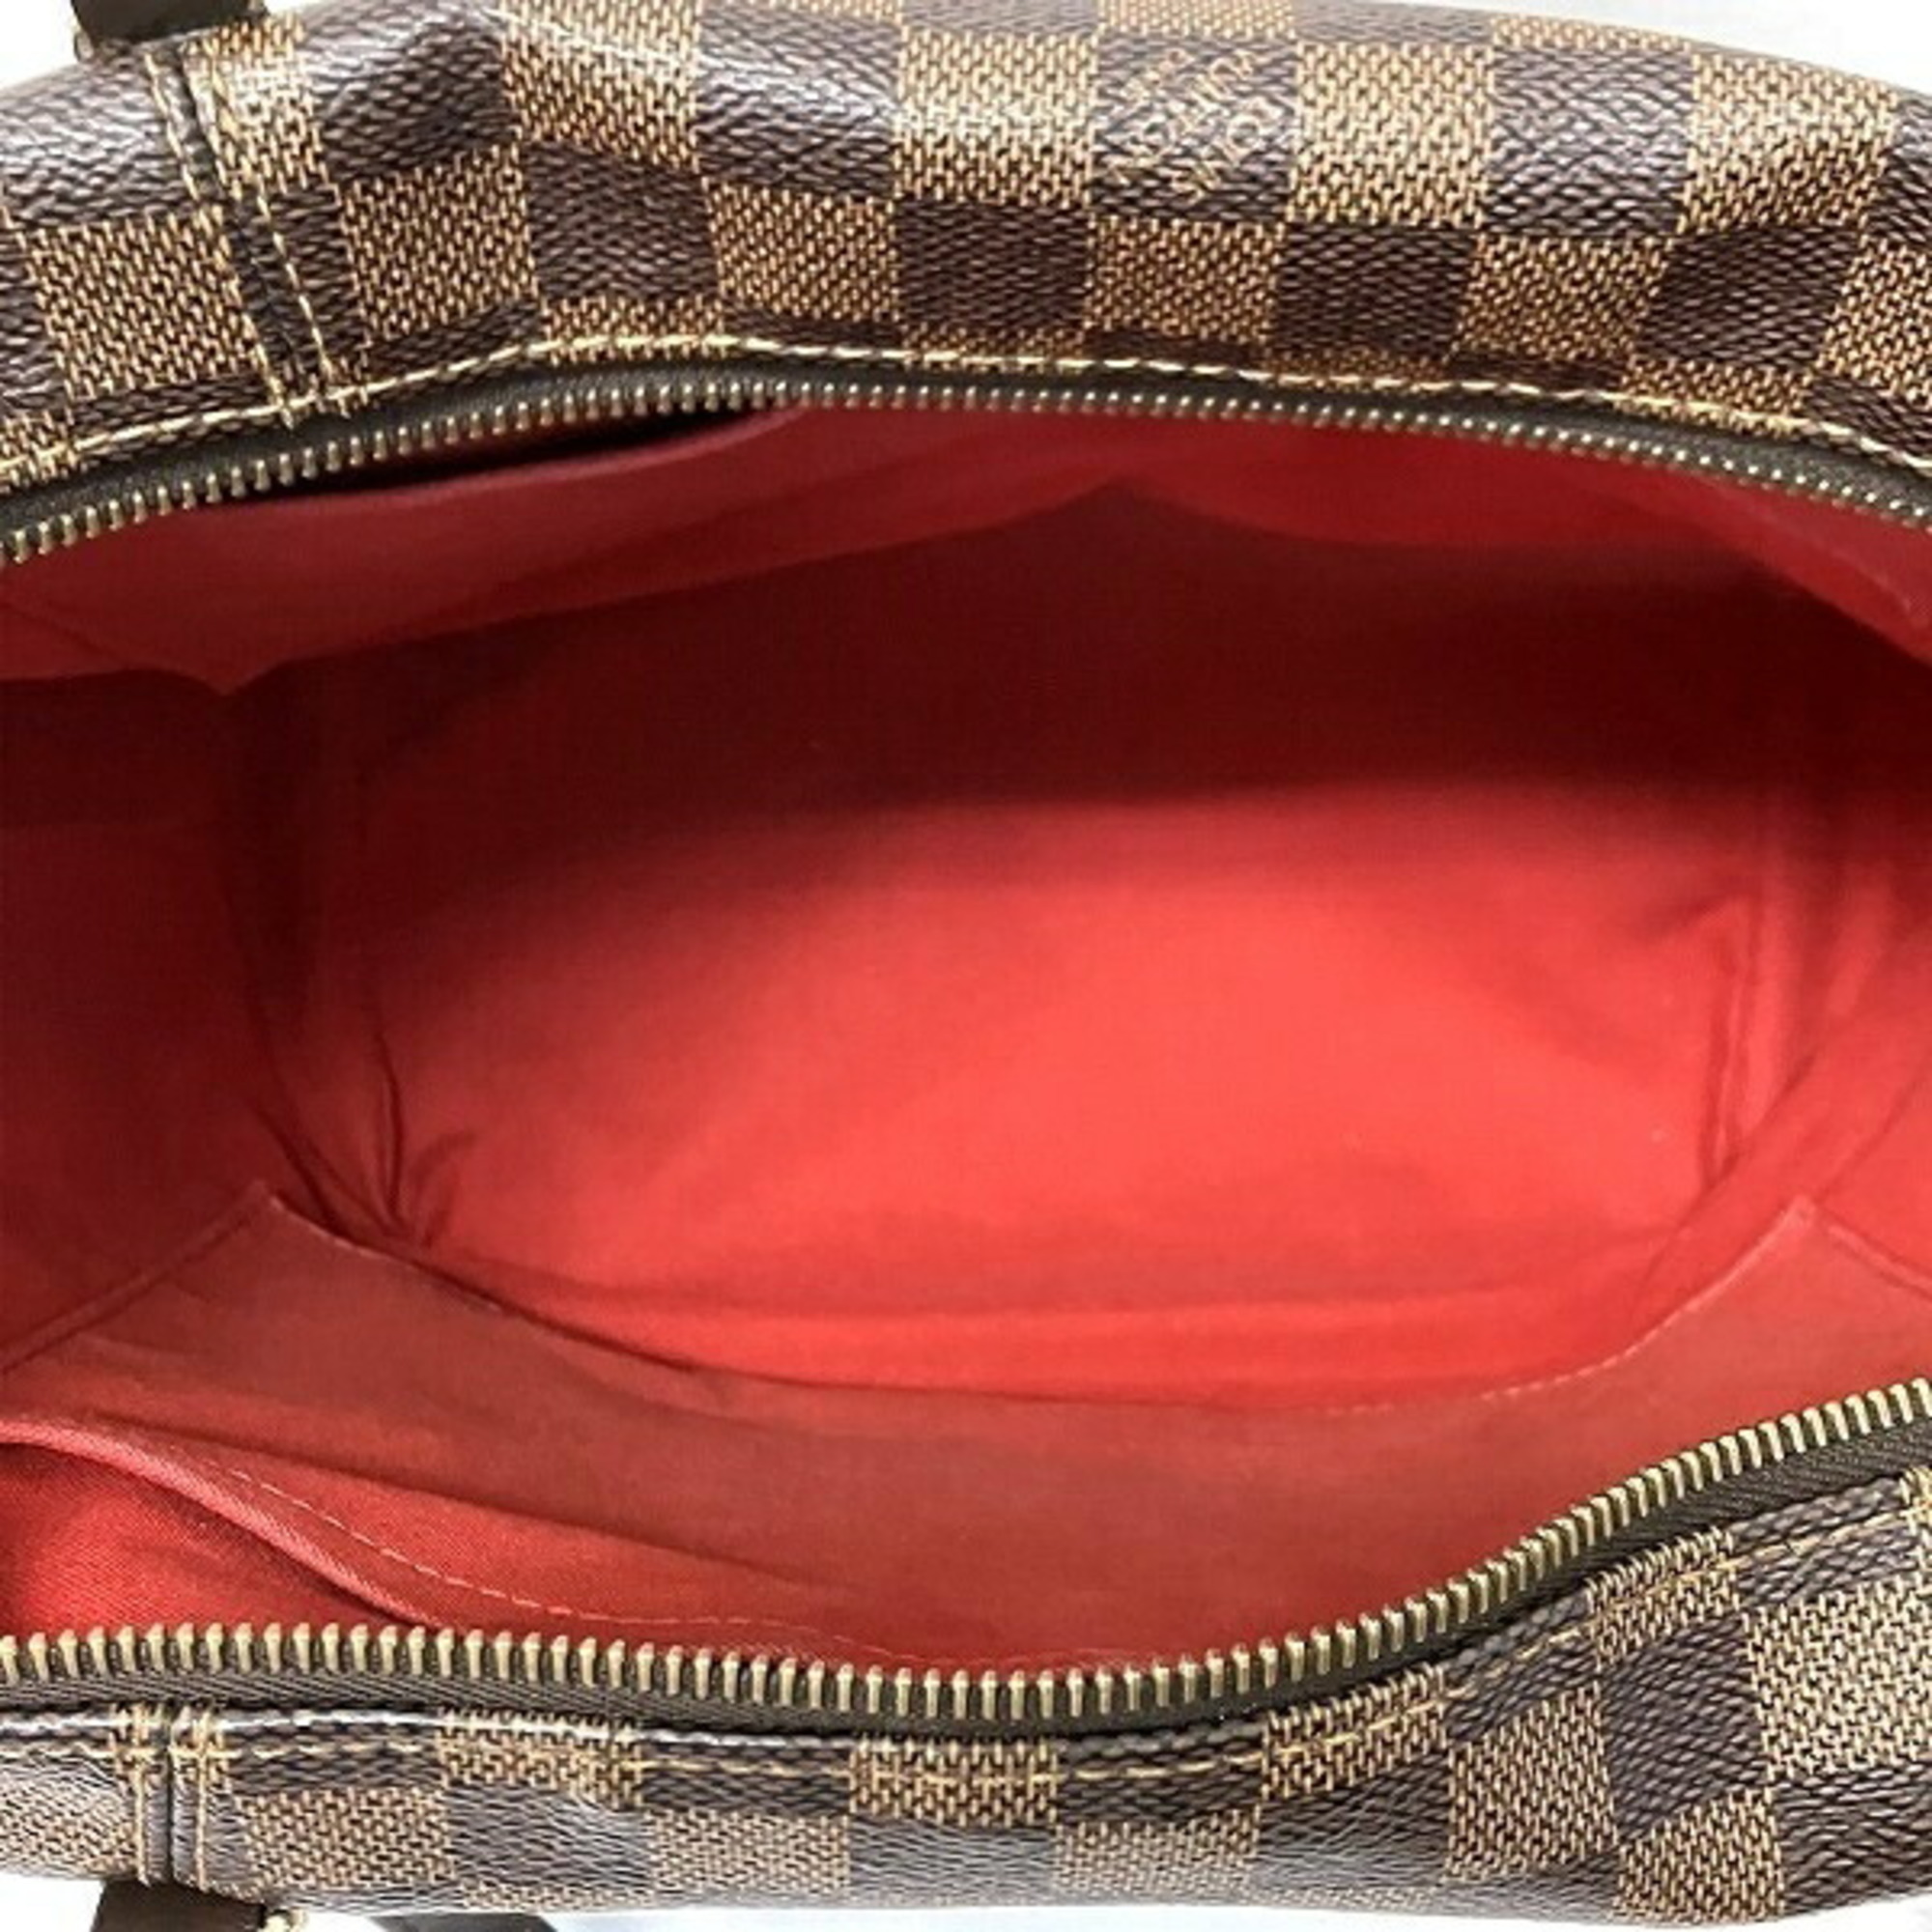 Louis Vuitton Damier Totally MM N41281 Bag Tote Women's